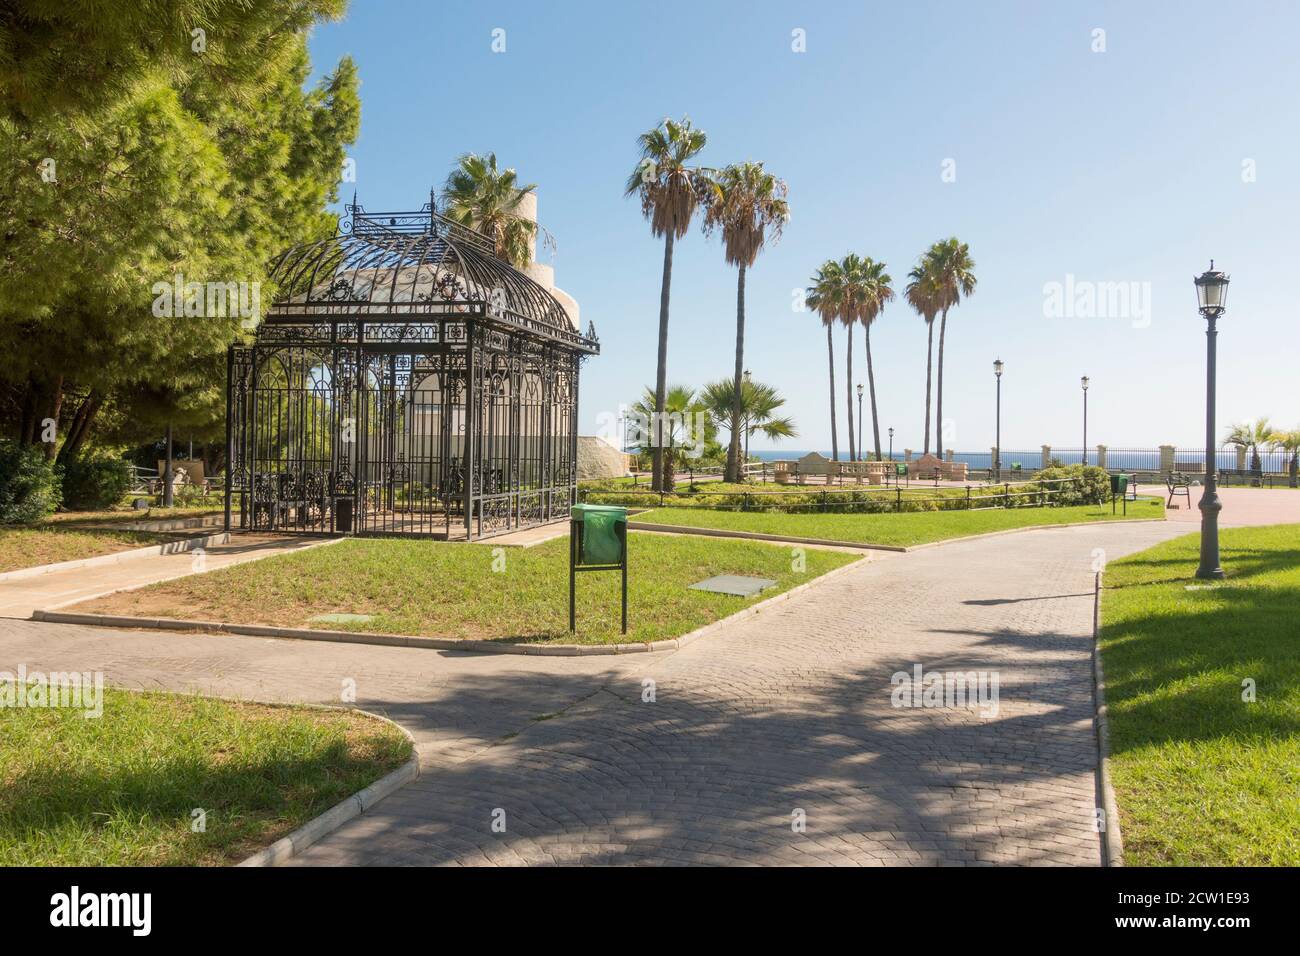 Art deco style metal pavilion in, La bateria park, Battery park in  Torremolinos, Costa del Sol, Andalucia, Spain Stock Photo - Alamy